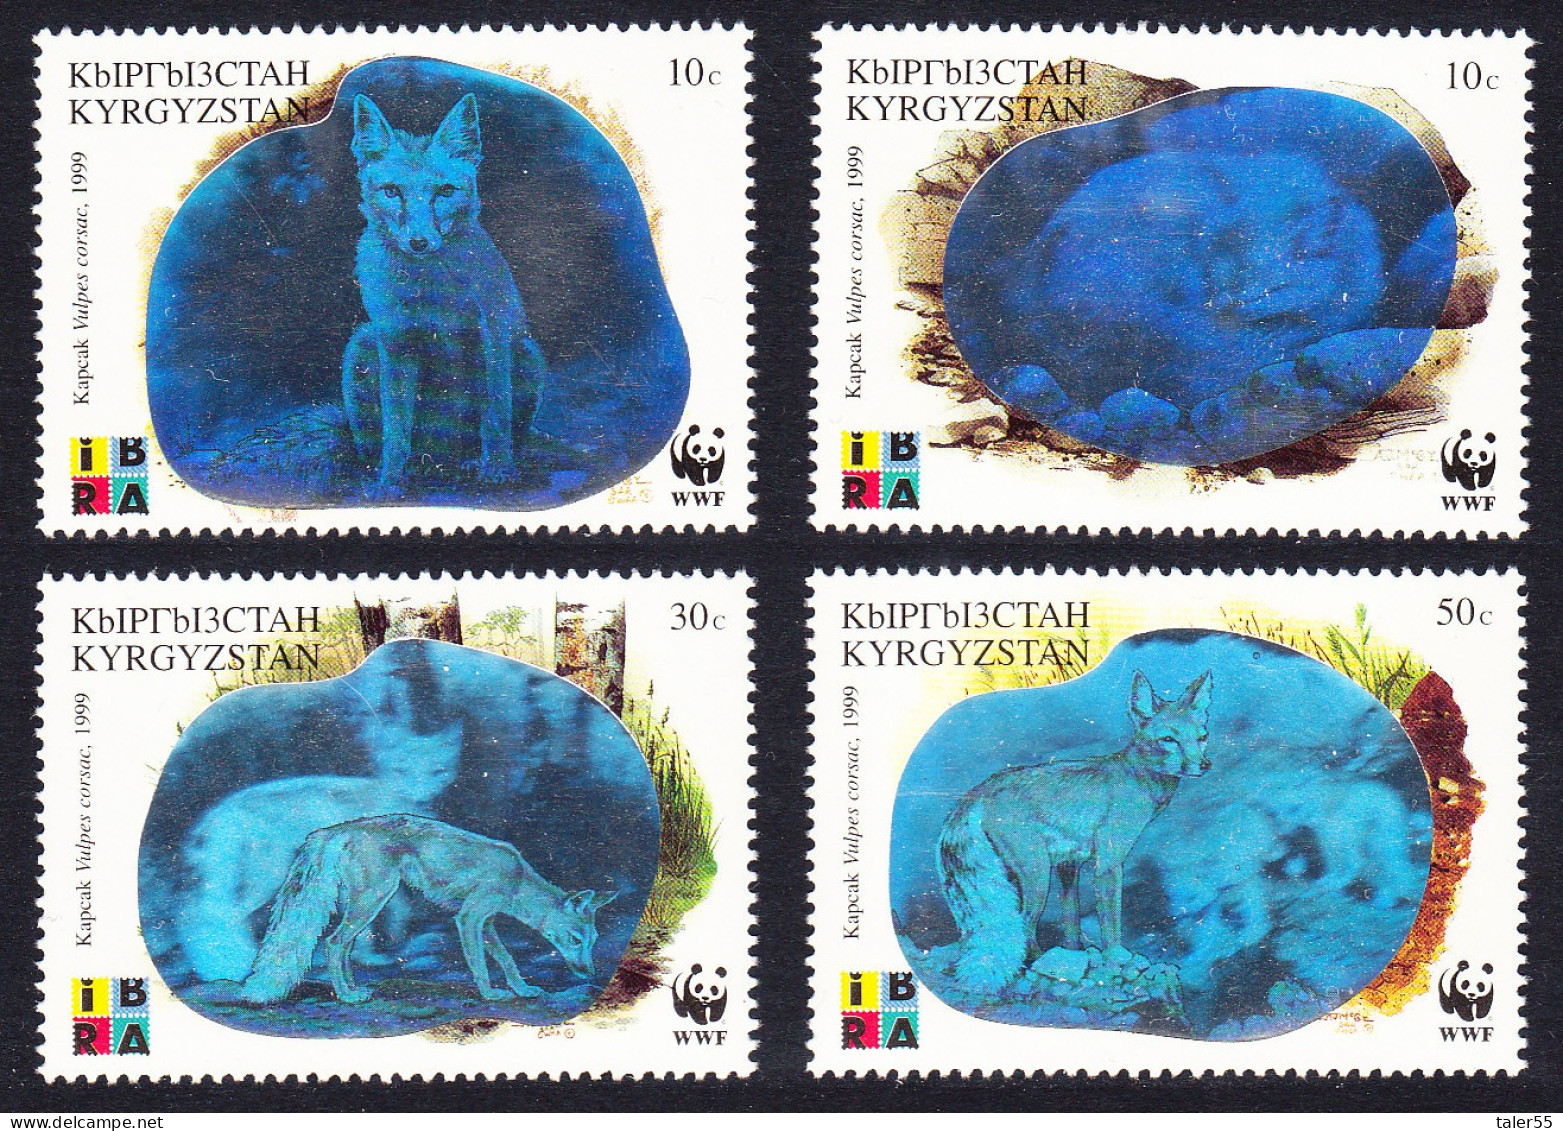 Kyrgyzstan WWF Corsac Fox Holographic Stamps 4v 1999 MNH SG#163-166 MI#172-175 Sc#123 A-d - Kirghizstan